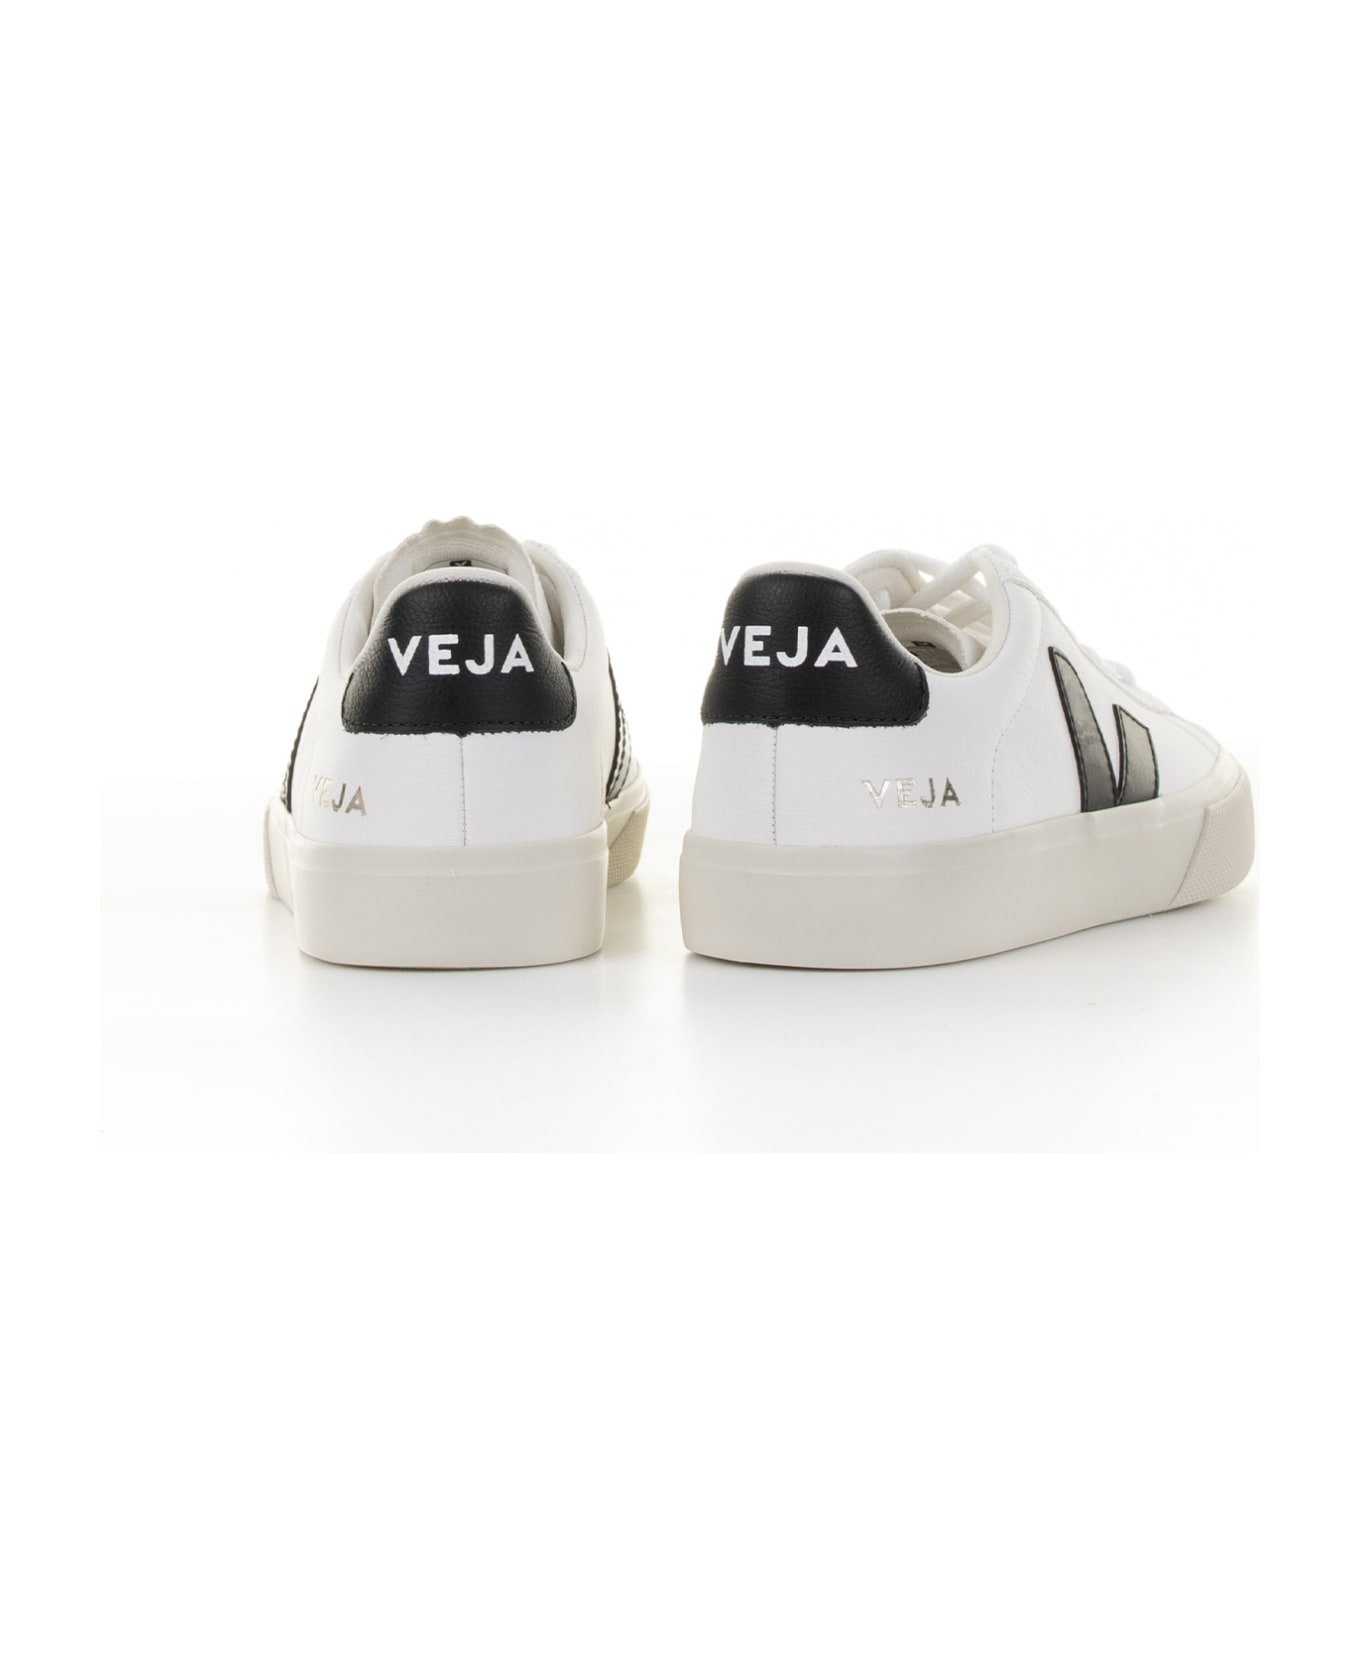 Veja Campo Sneaker In White Black Leather For Women